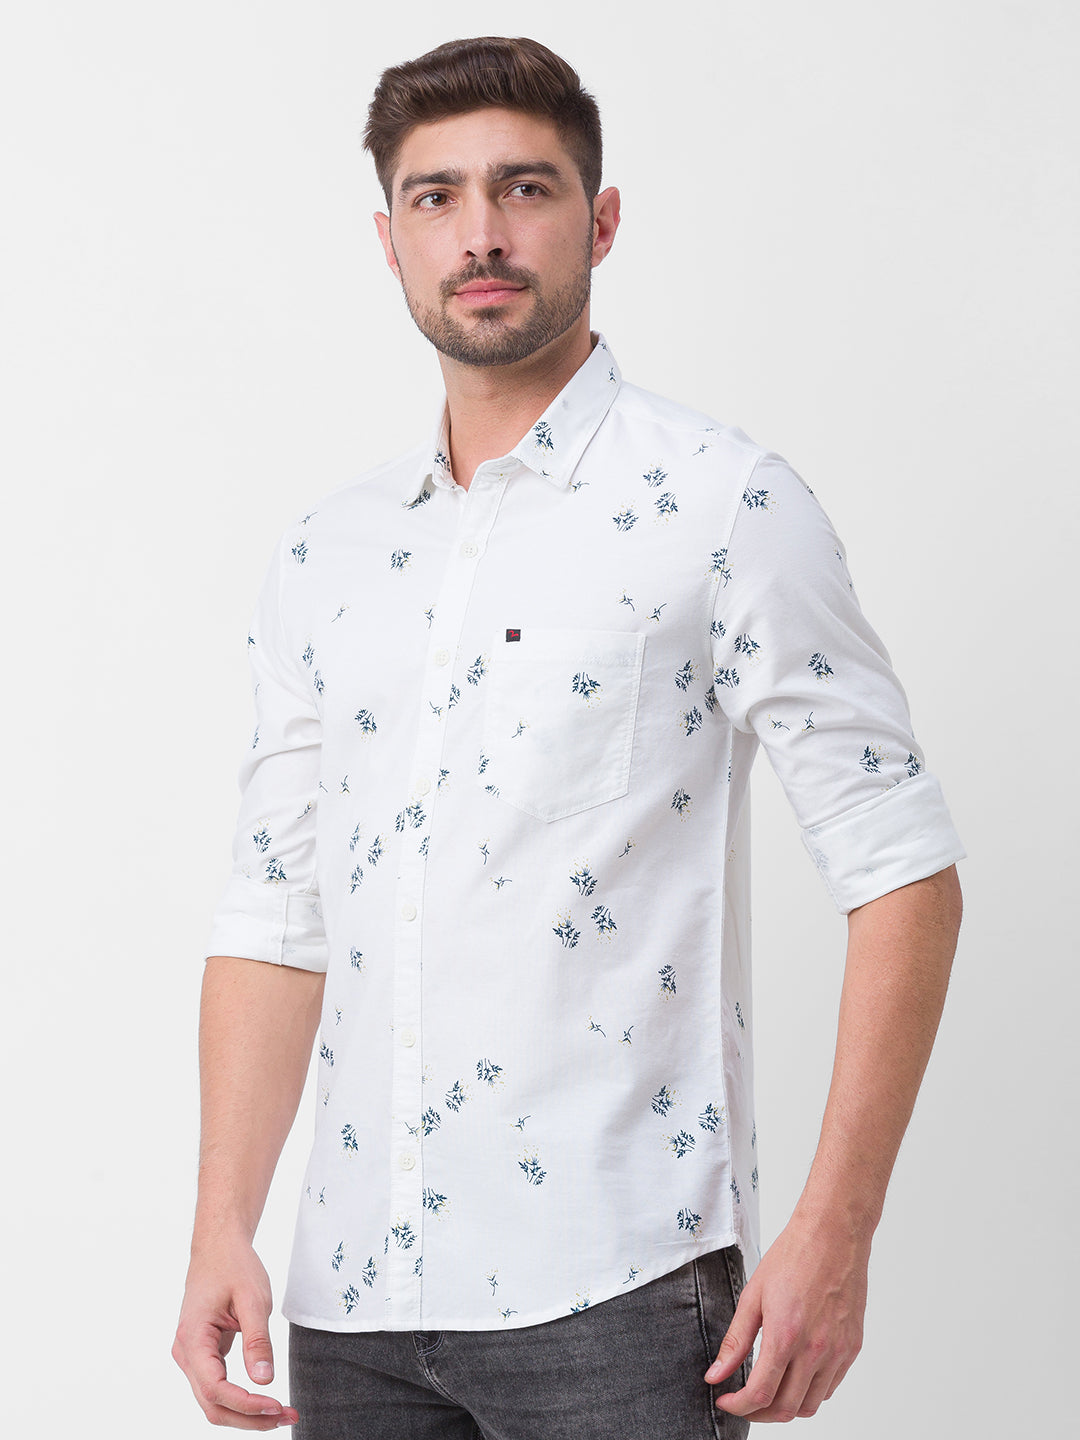 100% Cotton Mens Printed Casual Shirts, Full sleeves